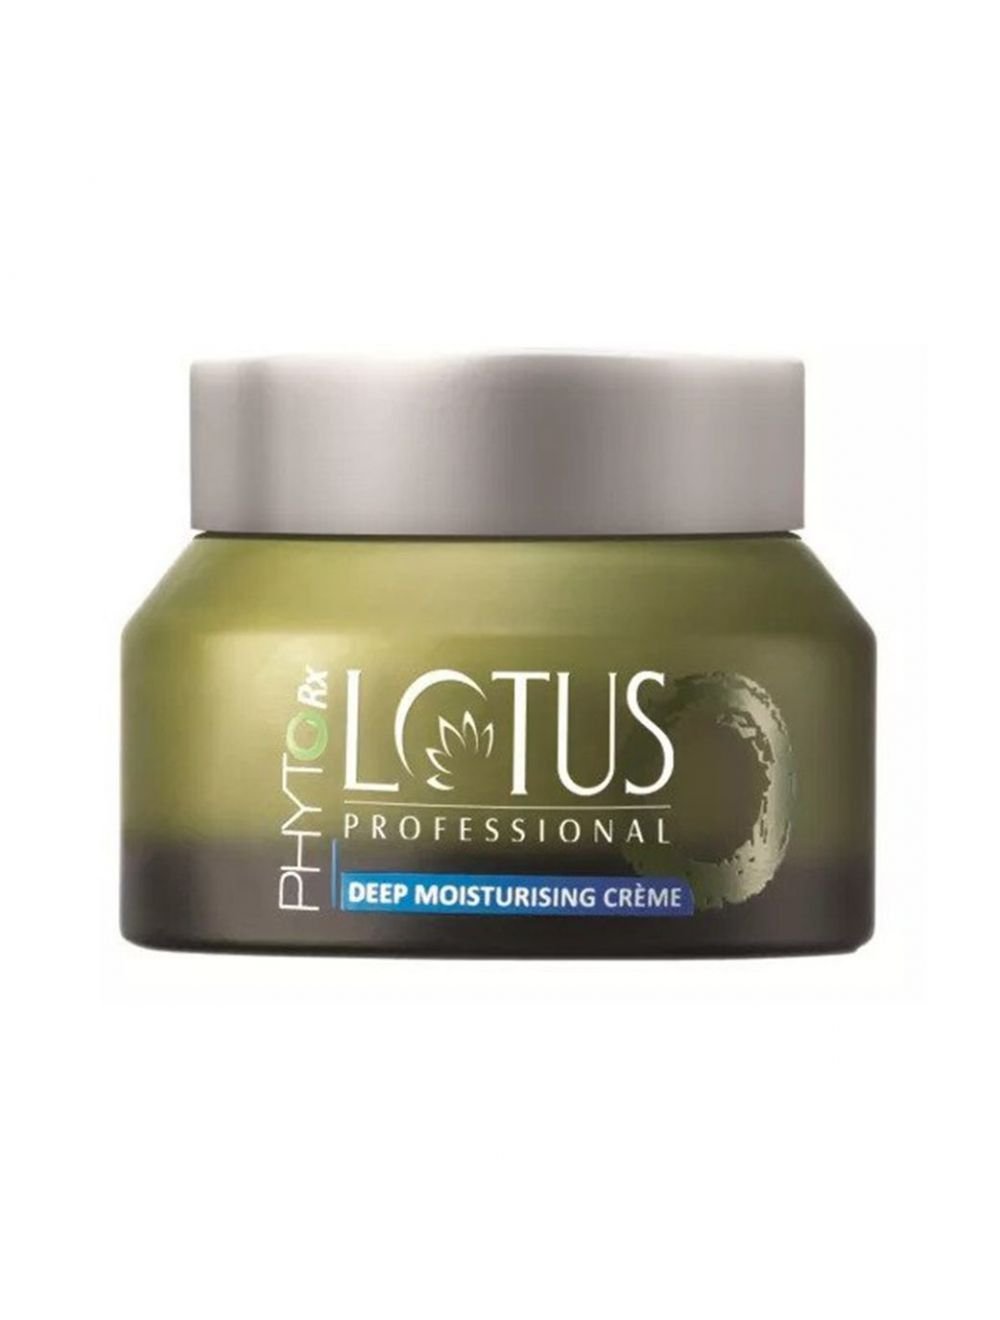 Lotus Professional Phytorx Deep Moisturising Crème (50g)